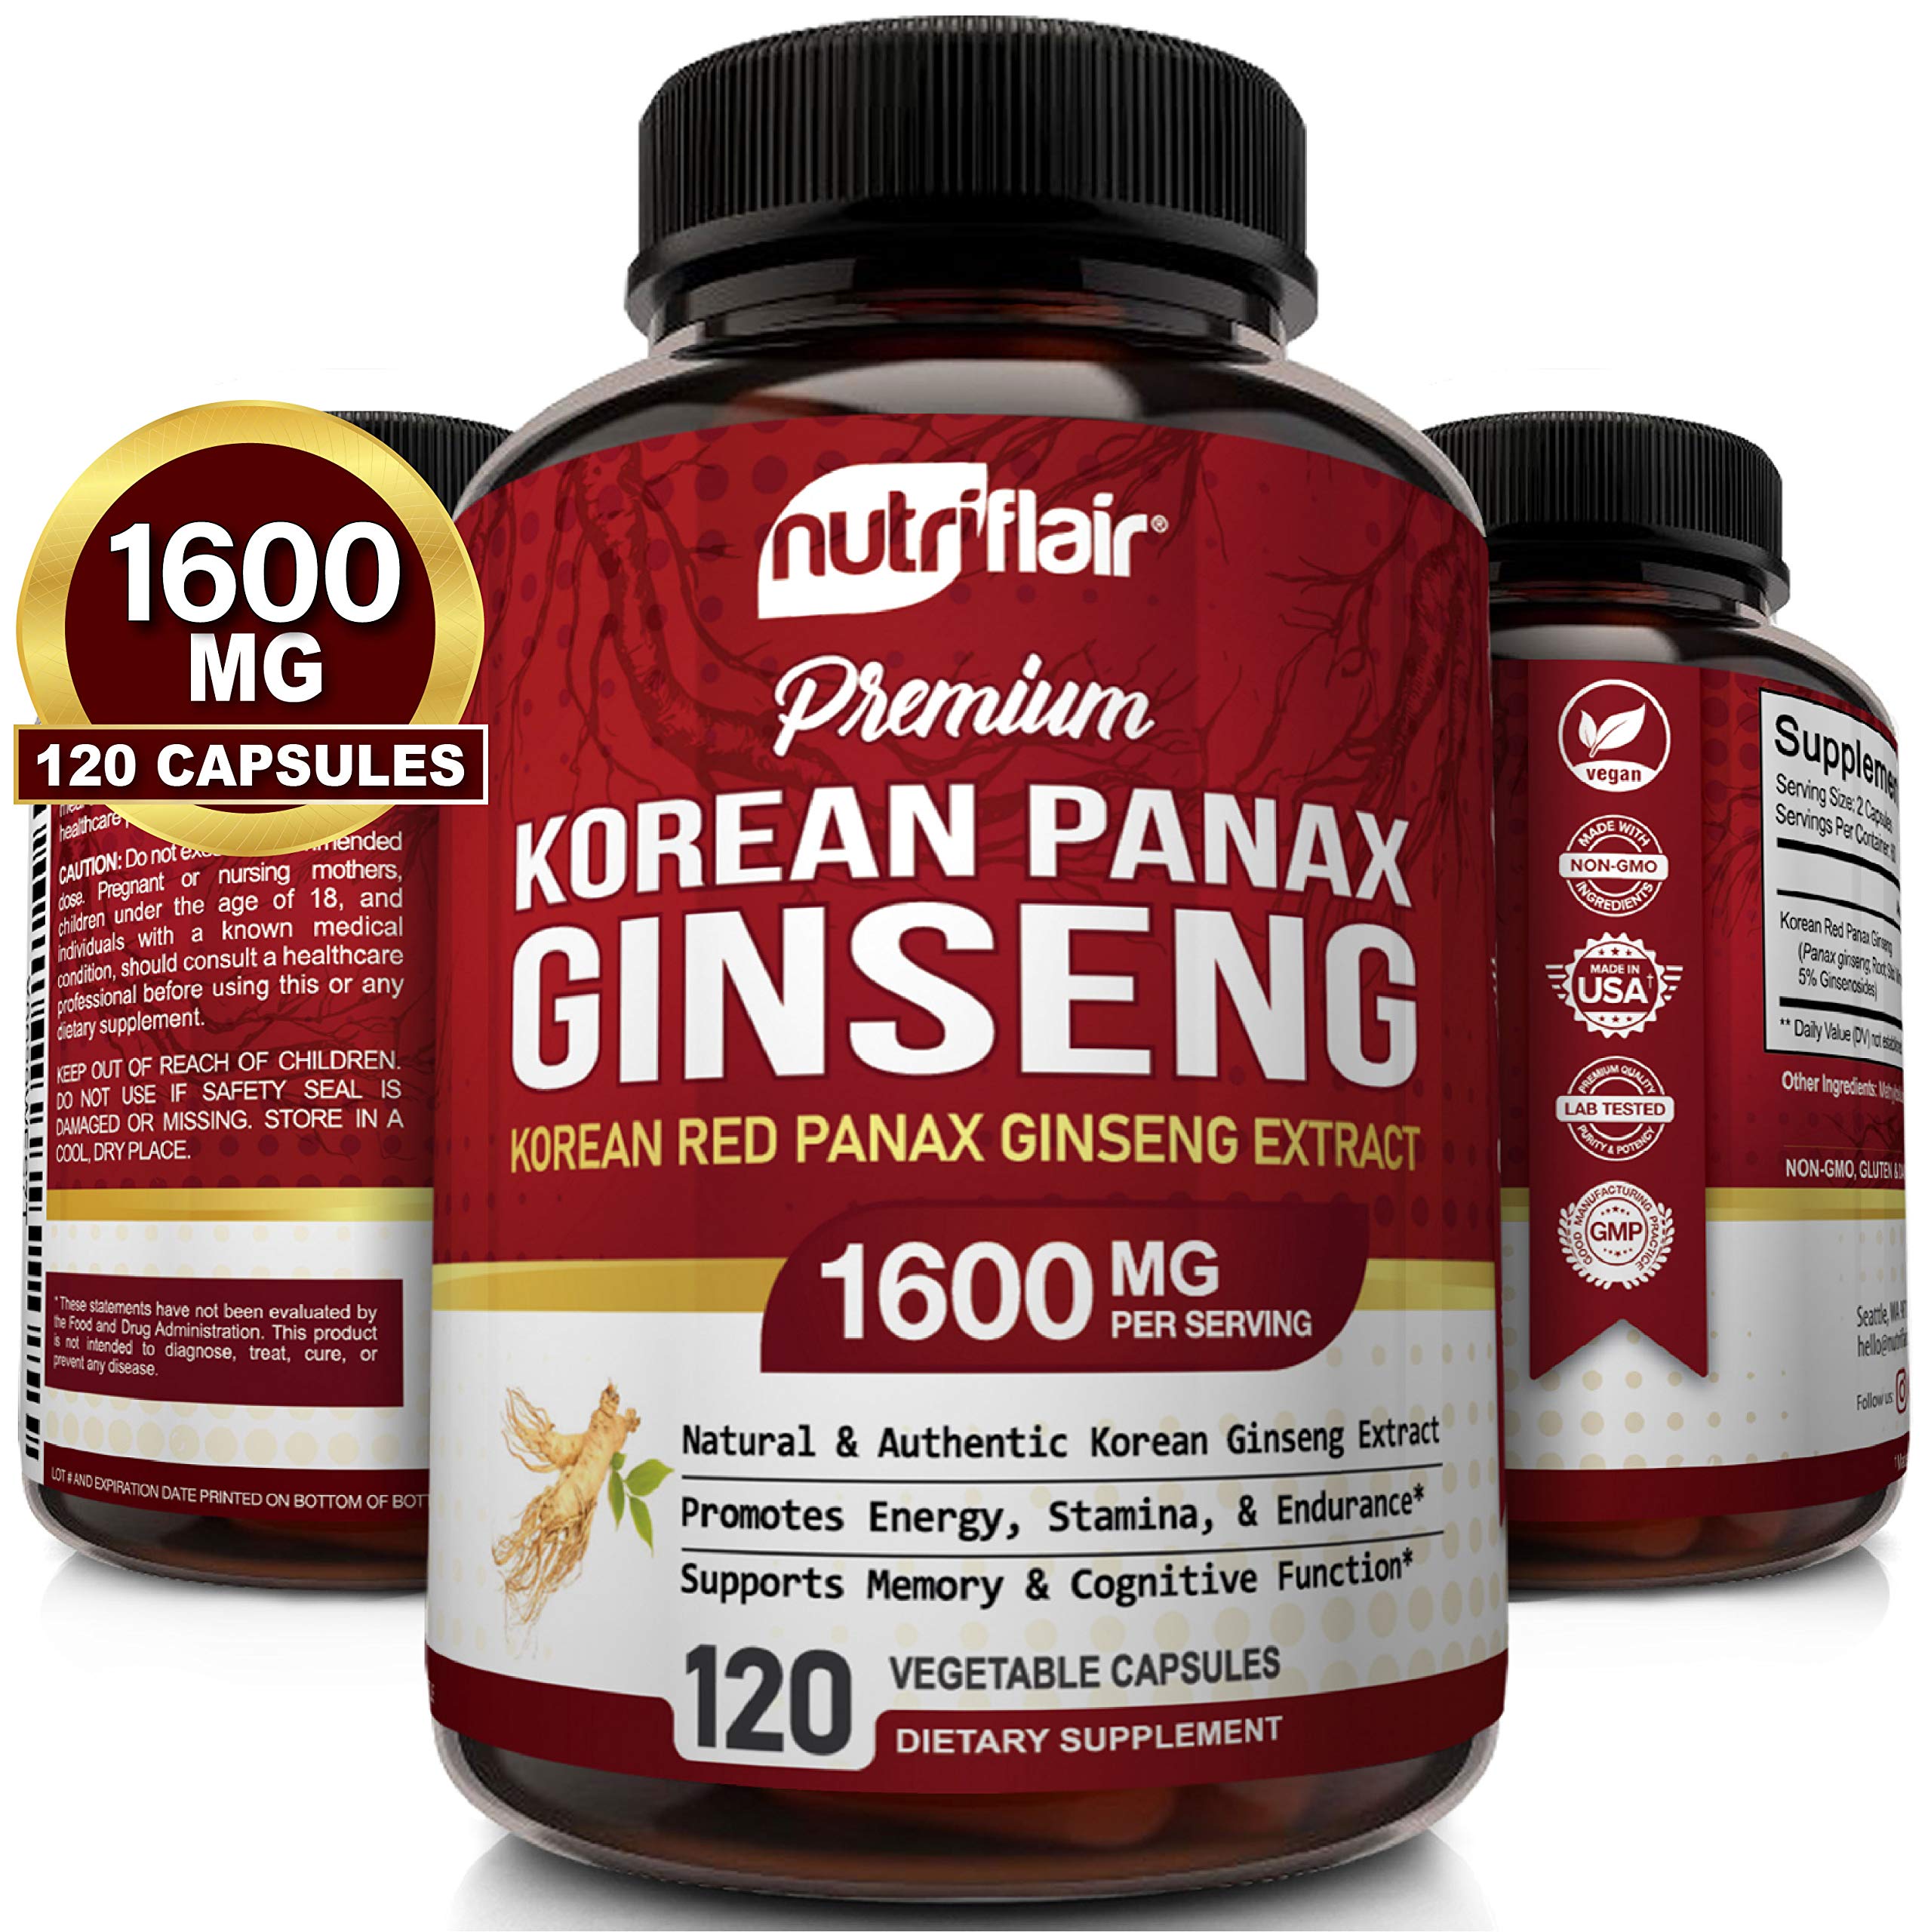 NutriFlair Korean Red Panax Ginseng 1600mg - 120 Vegan Capsules - High Strength Ginseng Root Ginsenosides Extract Powder Supplement - Energy, Focus, Libido, Performance Pills for Women & Men, Non-GMO